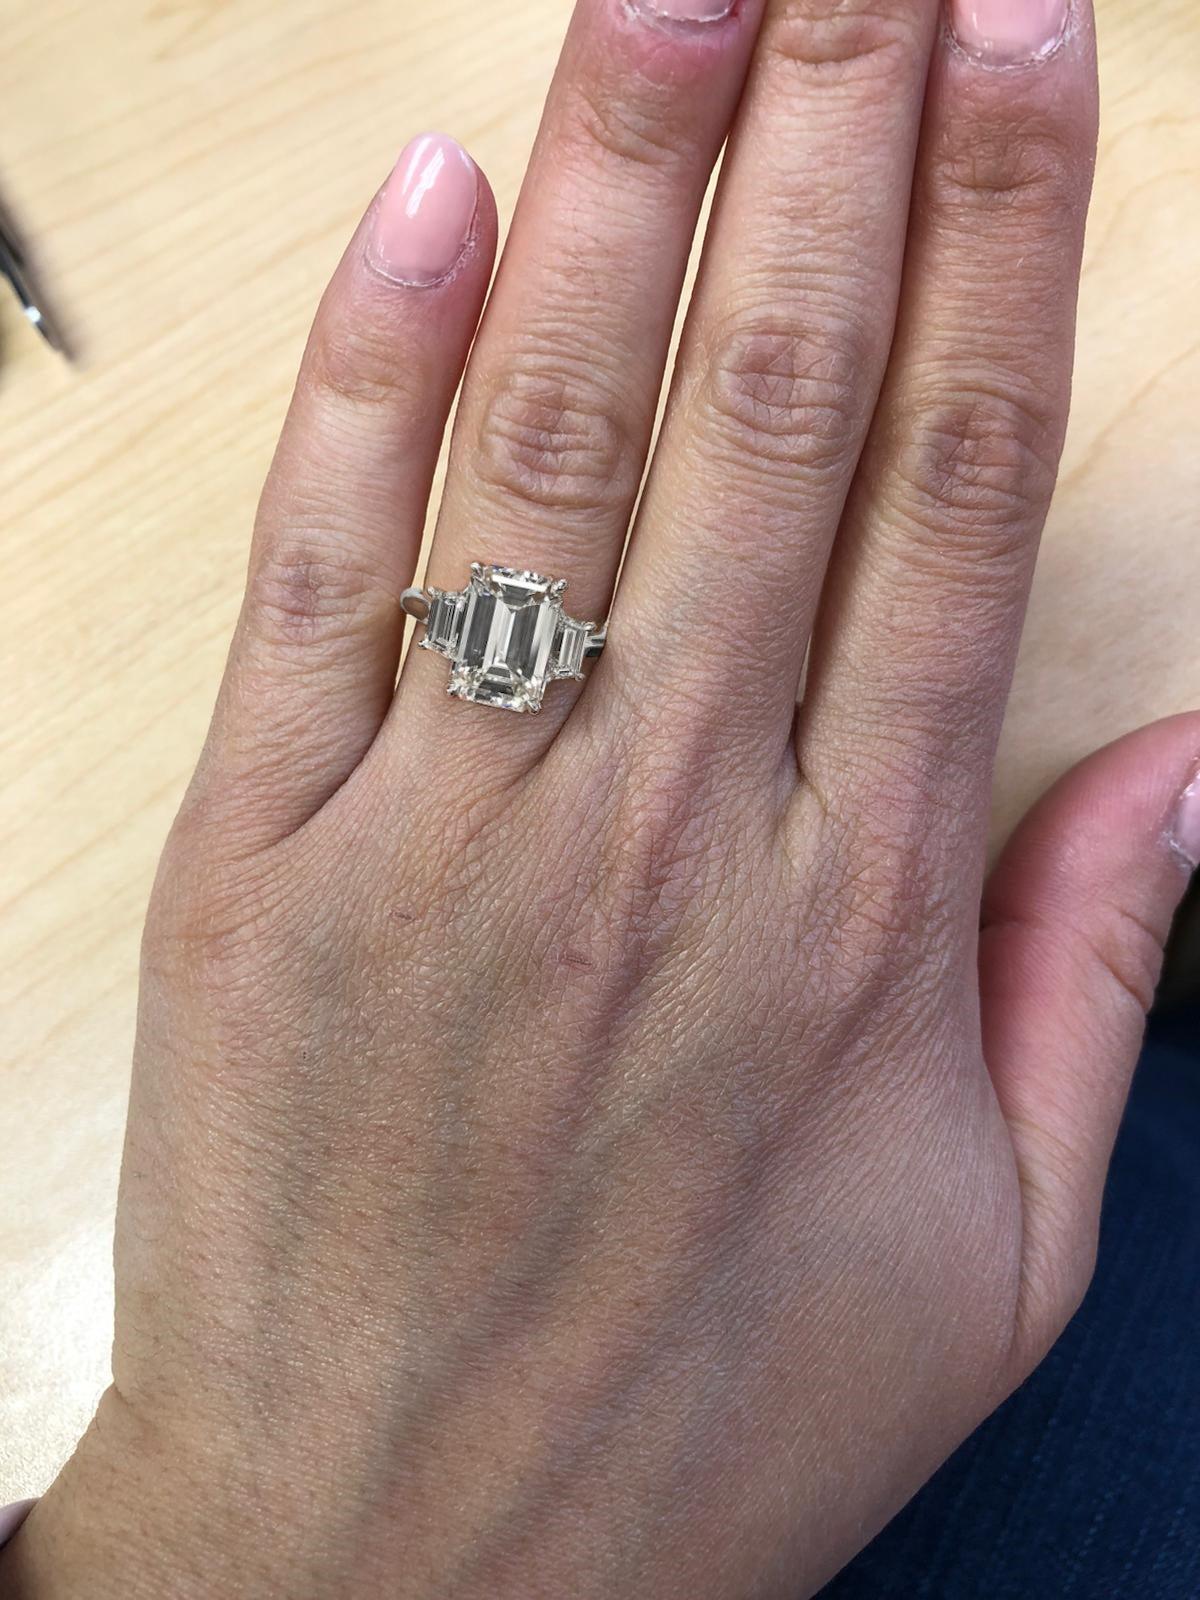 GIA Certified 3 Carat Emerald Cut Diamond Three Stone Ring
VVS2 Clarity
H Color


